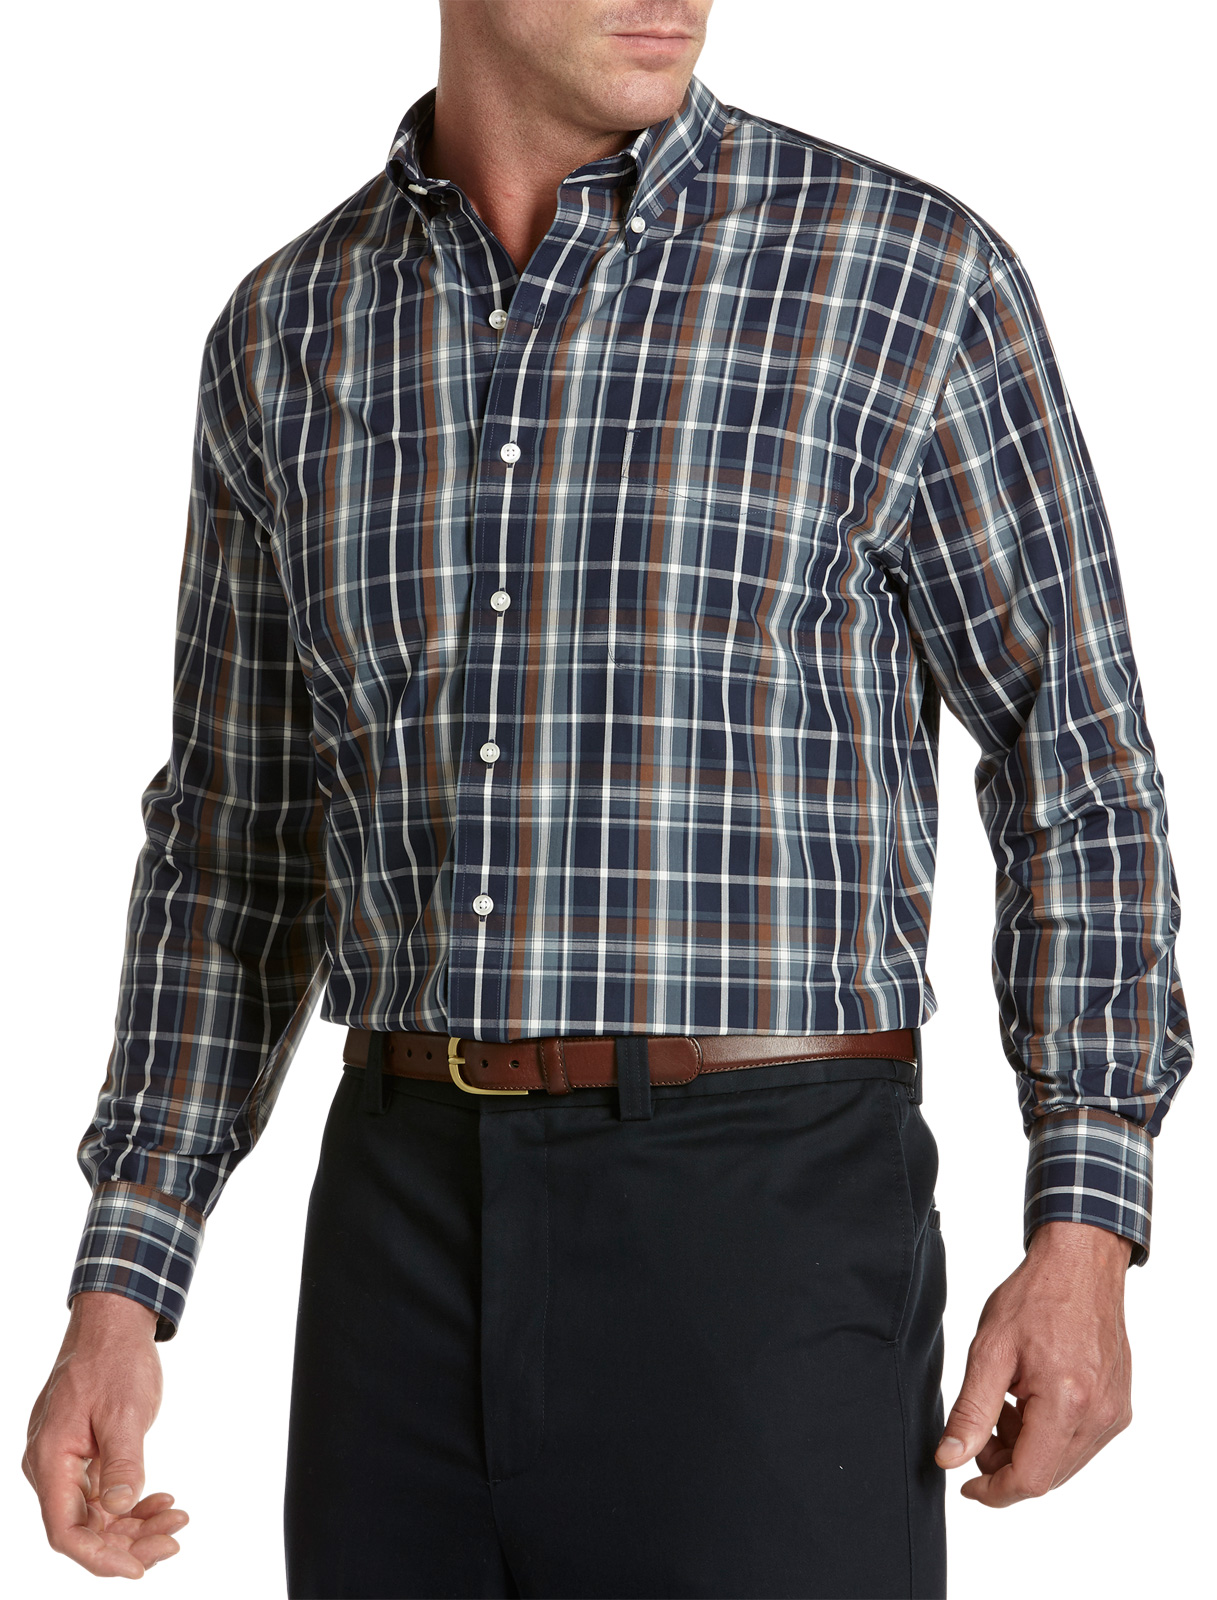 Oak Hill Men's Big and Tall Cool &amp; Dry Medium Check Sport Shirt